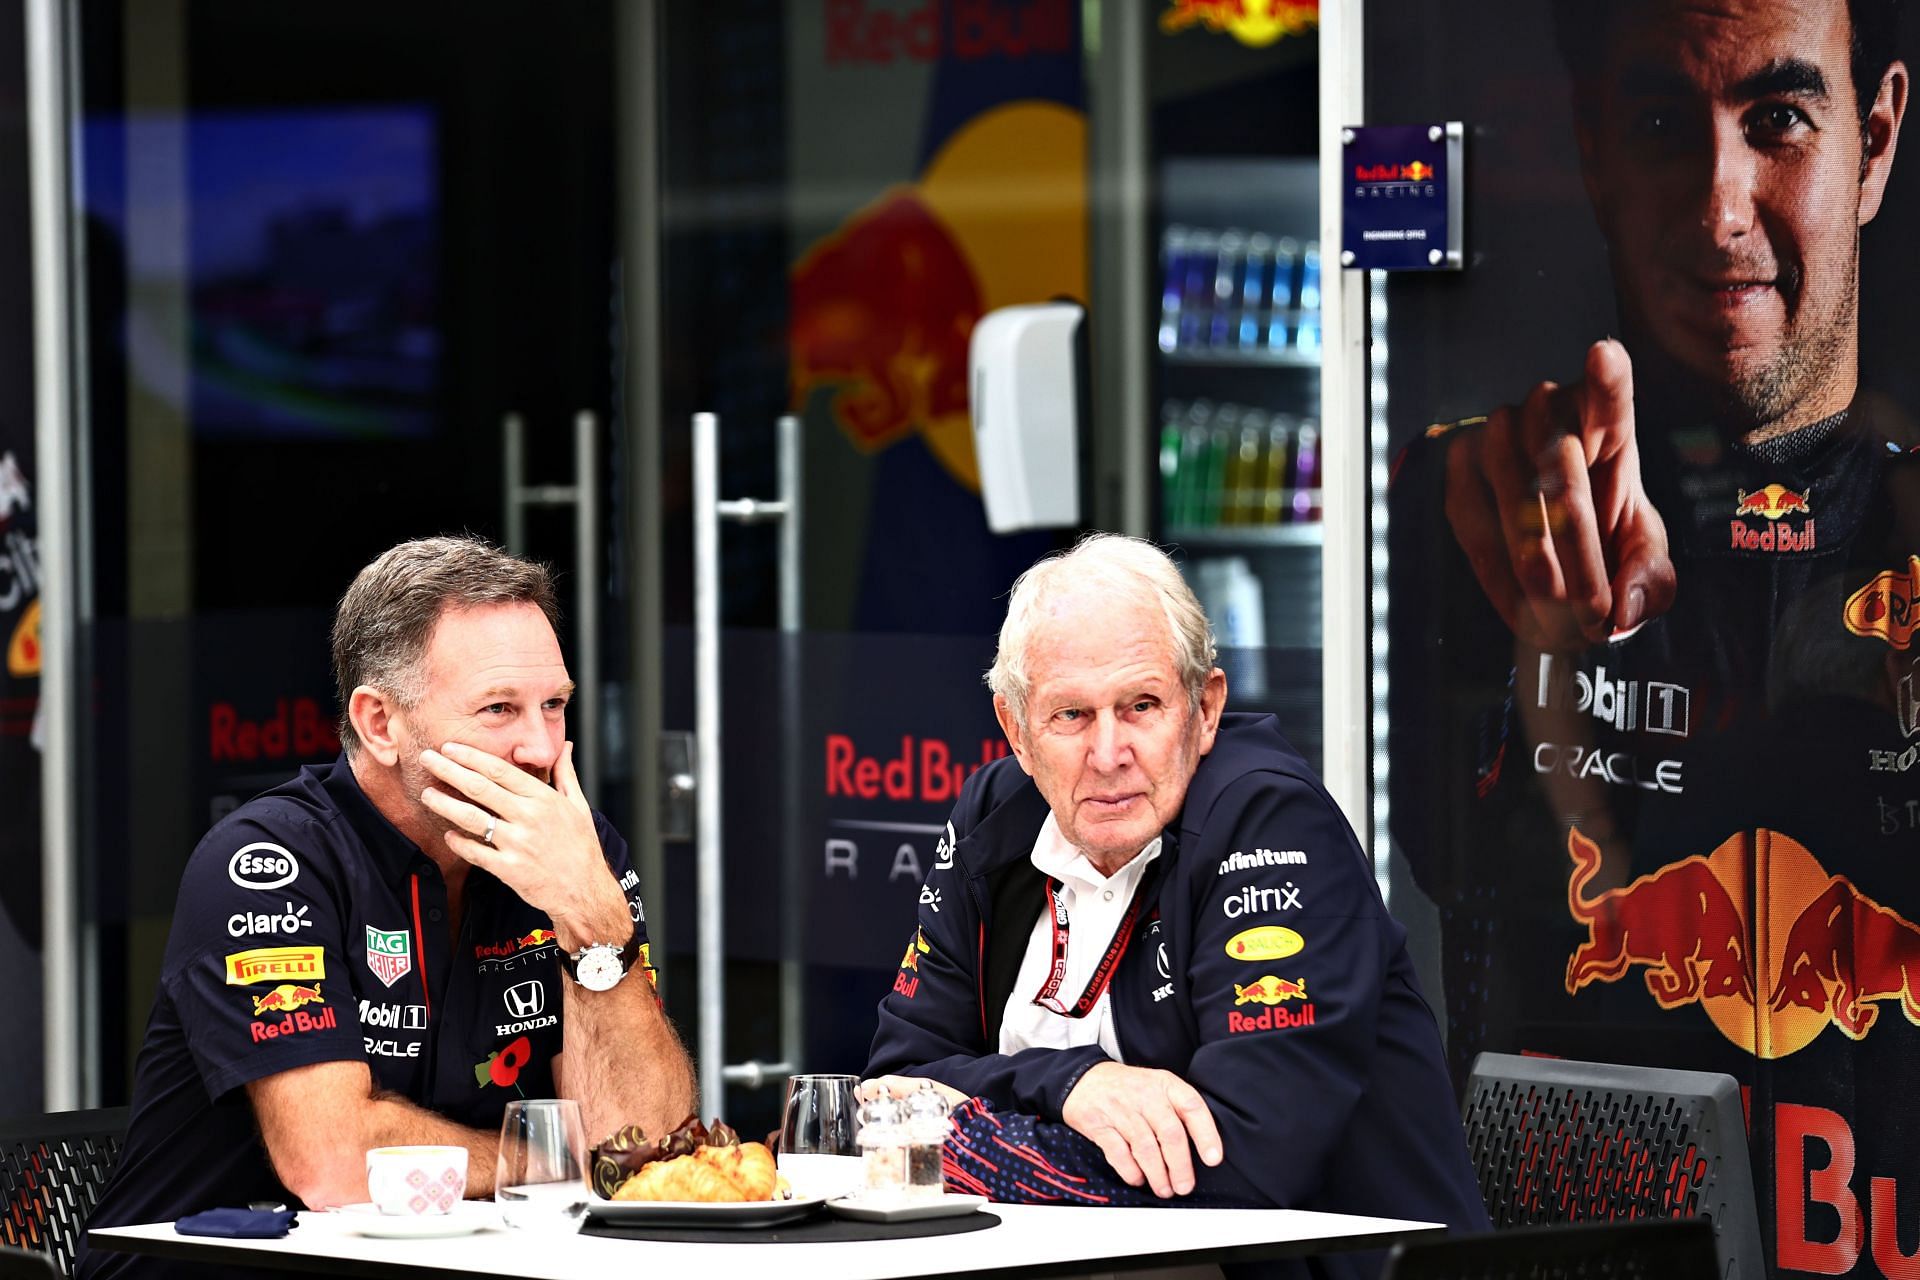 F1 Grand Prix of Brazil - Christian Horner and Helmut Marko sharing a moment.